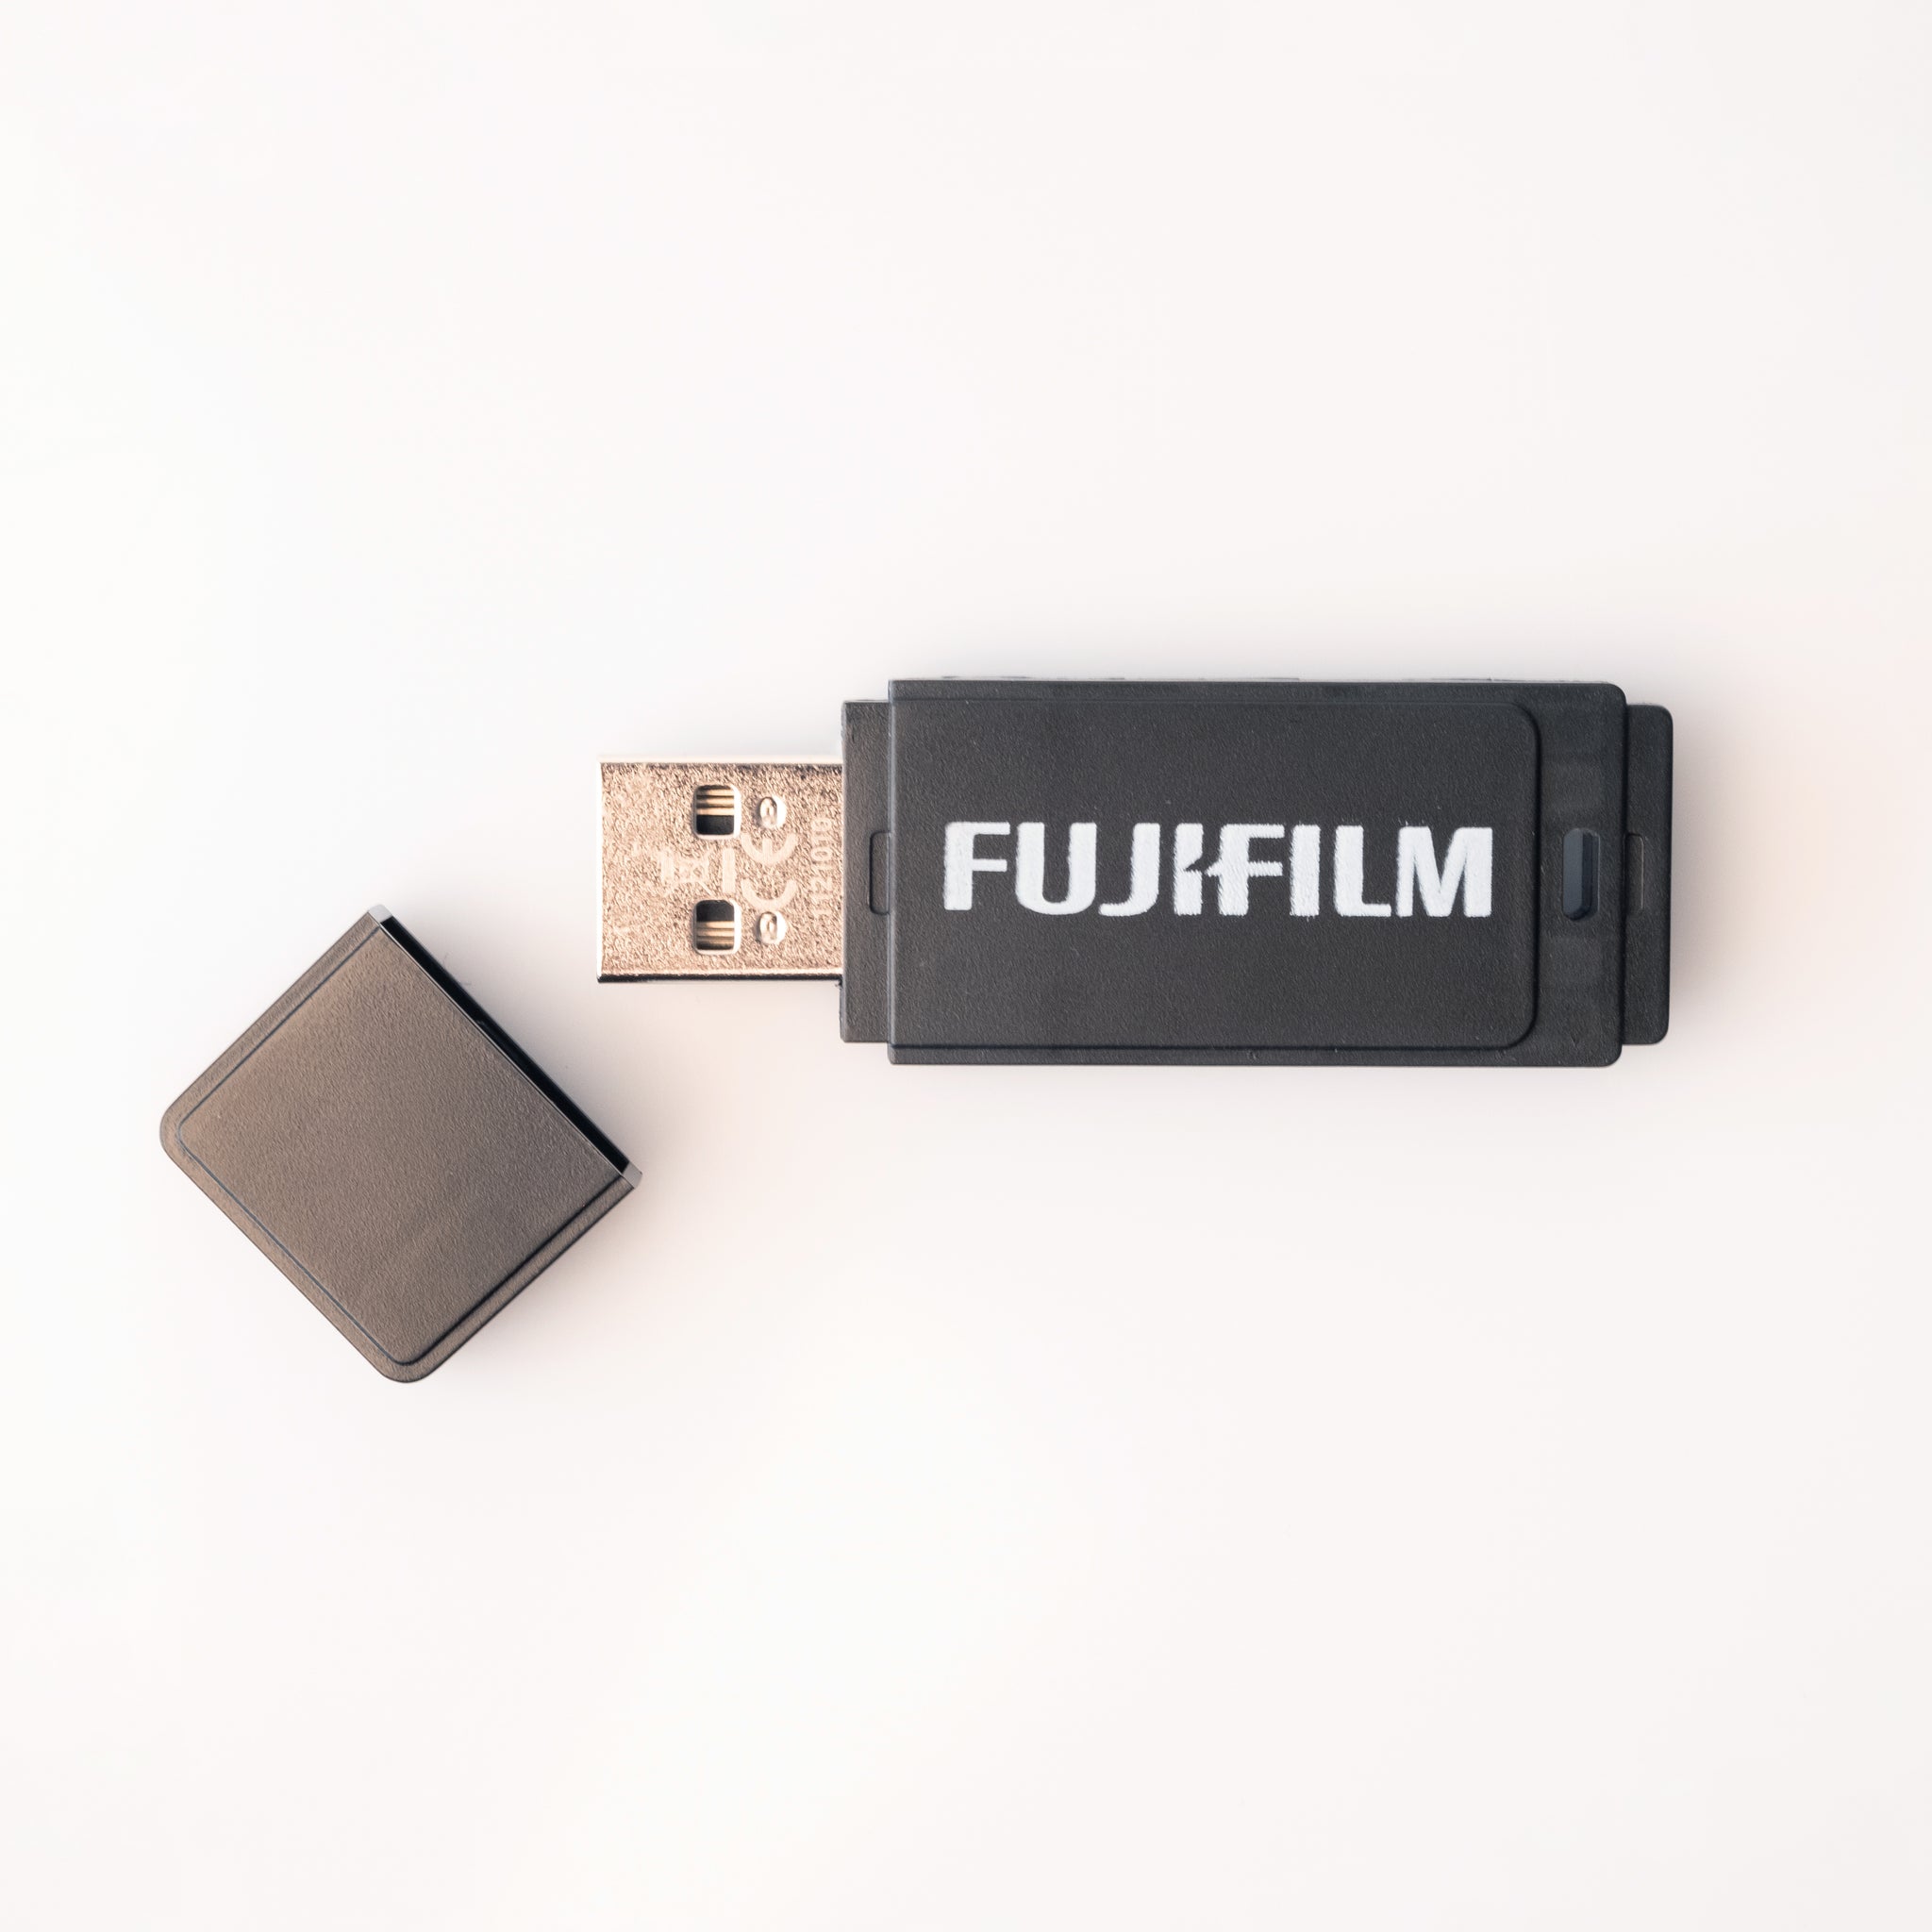 FUJIFILM USB 2.0 FLASH DRIVE 8GB